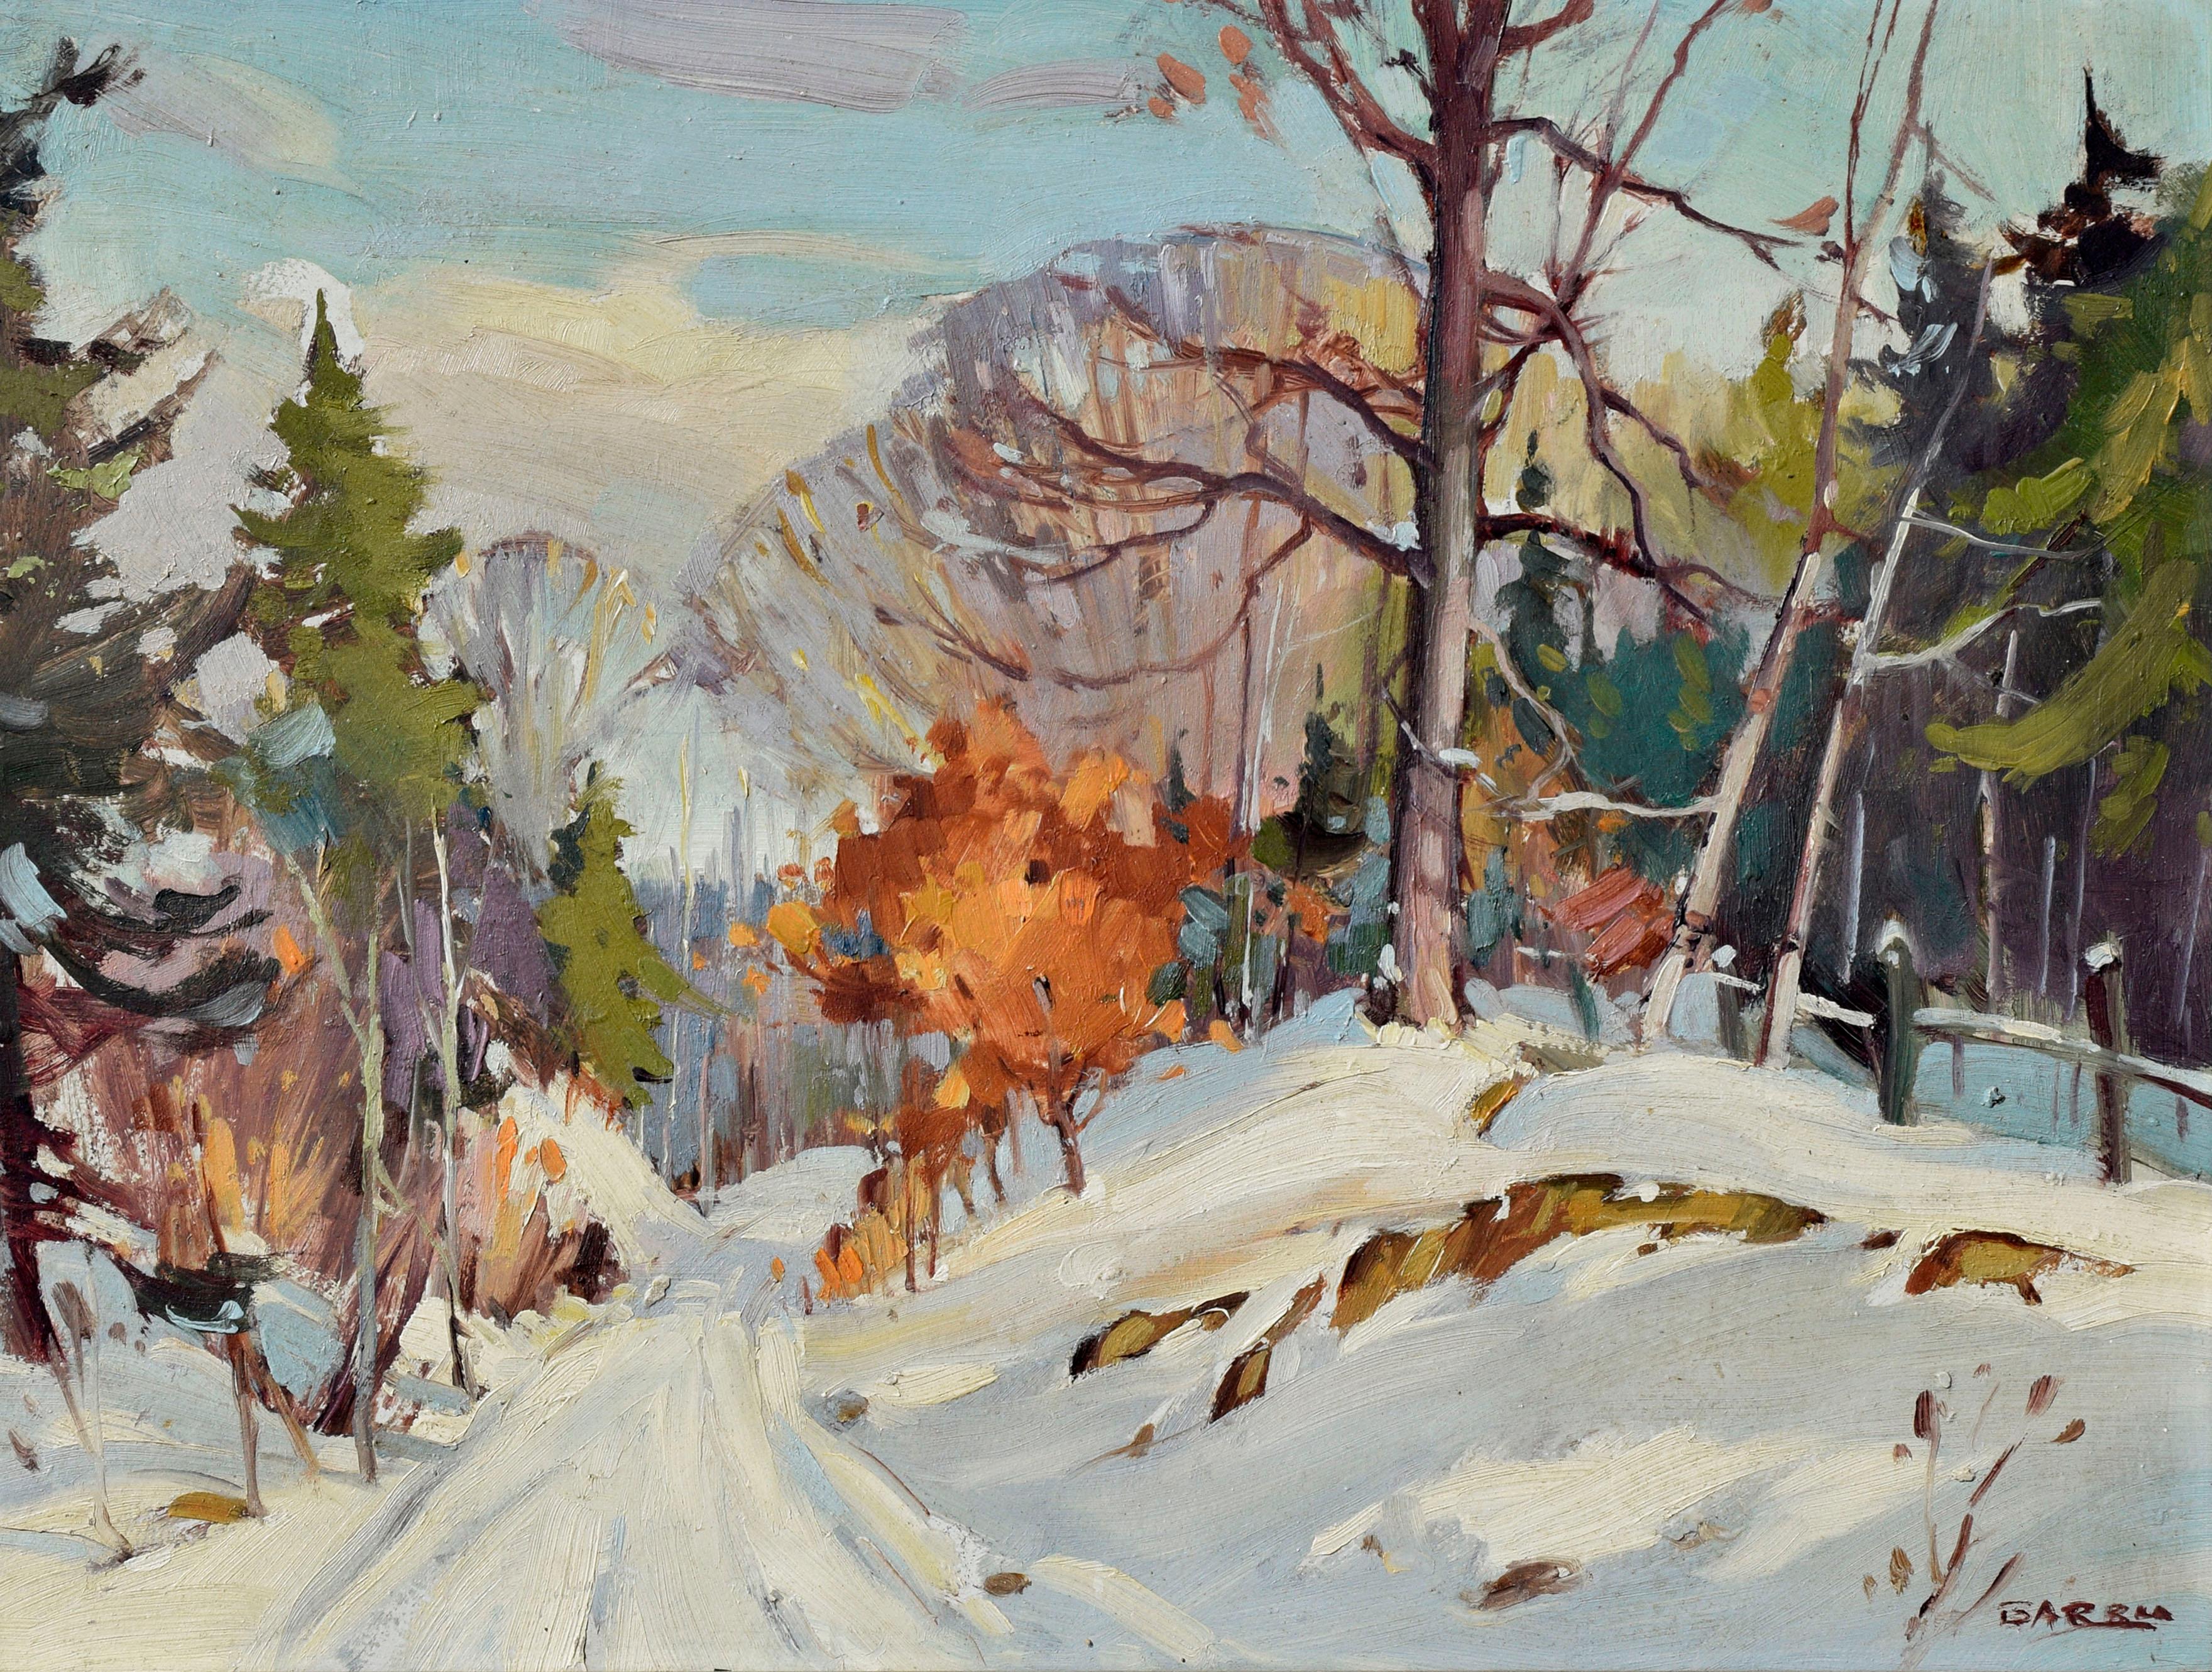 Mountain Road in Winter  - Painting by Stephen Carlton Garris